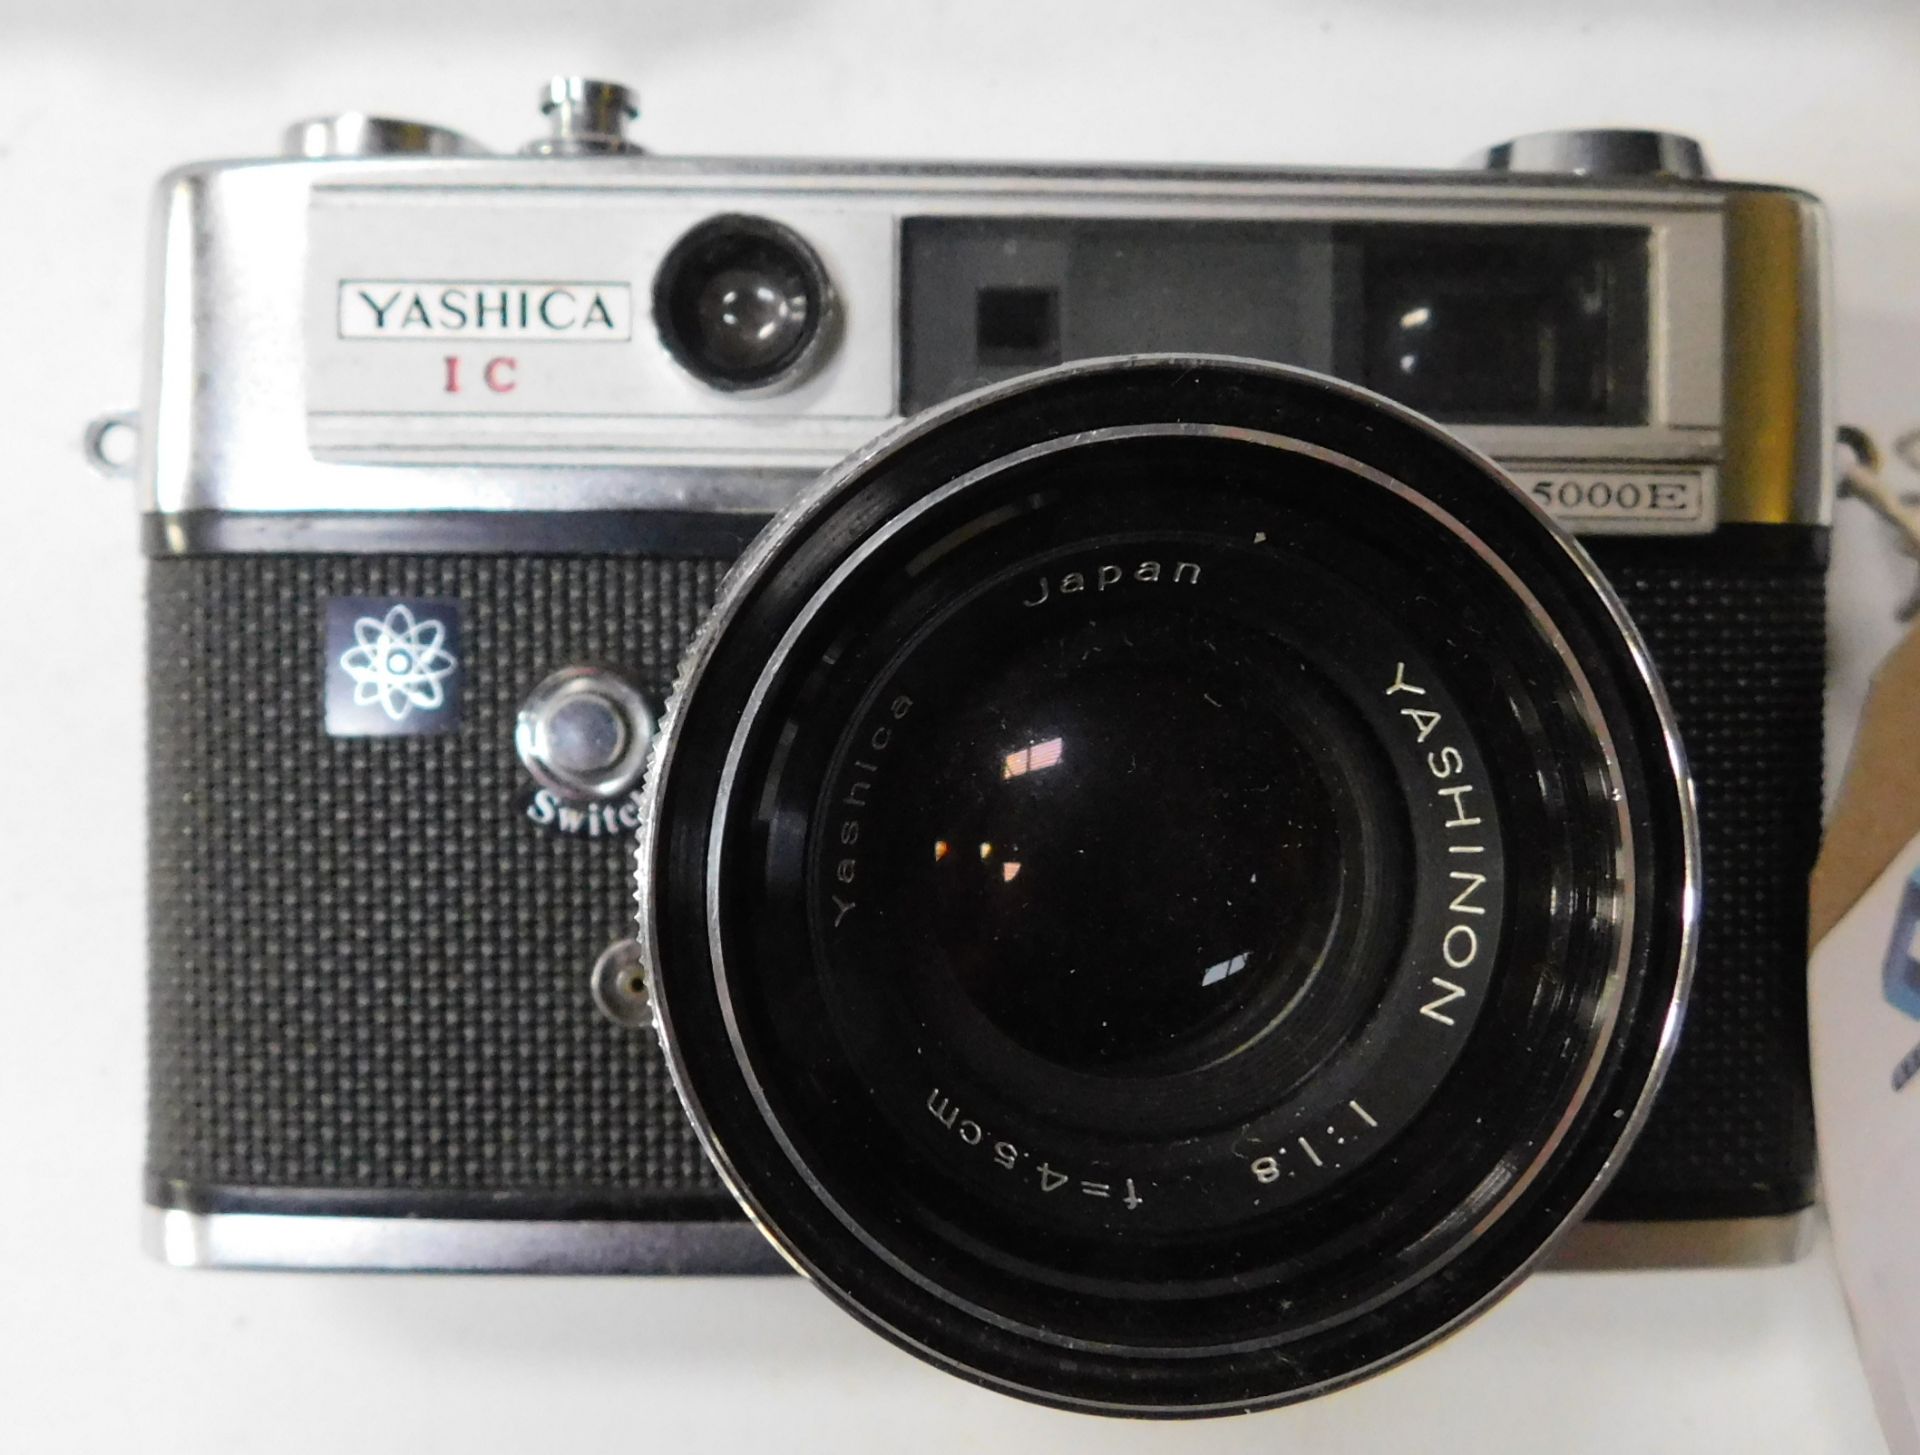 Zorki 4K Film Camera, Number 76780614, Yashica IC Lynx 5000E Film Camera, Number 010522 & Cosina - Image 2 of 7